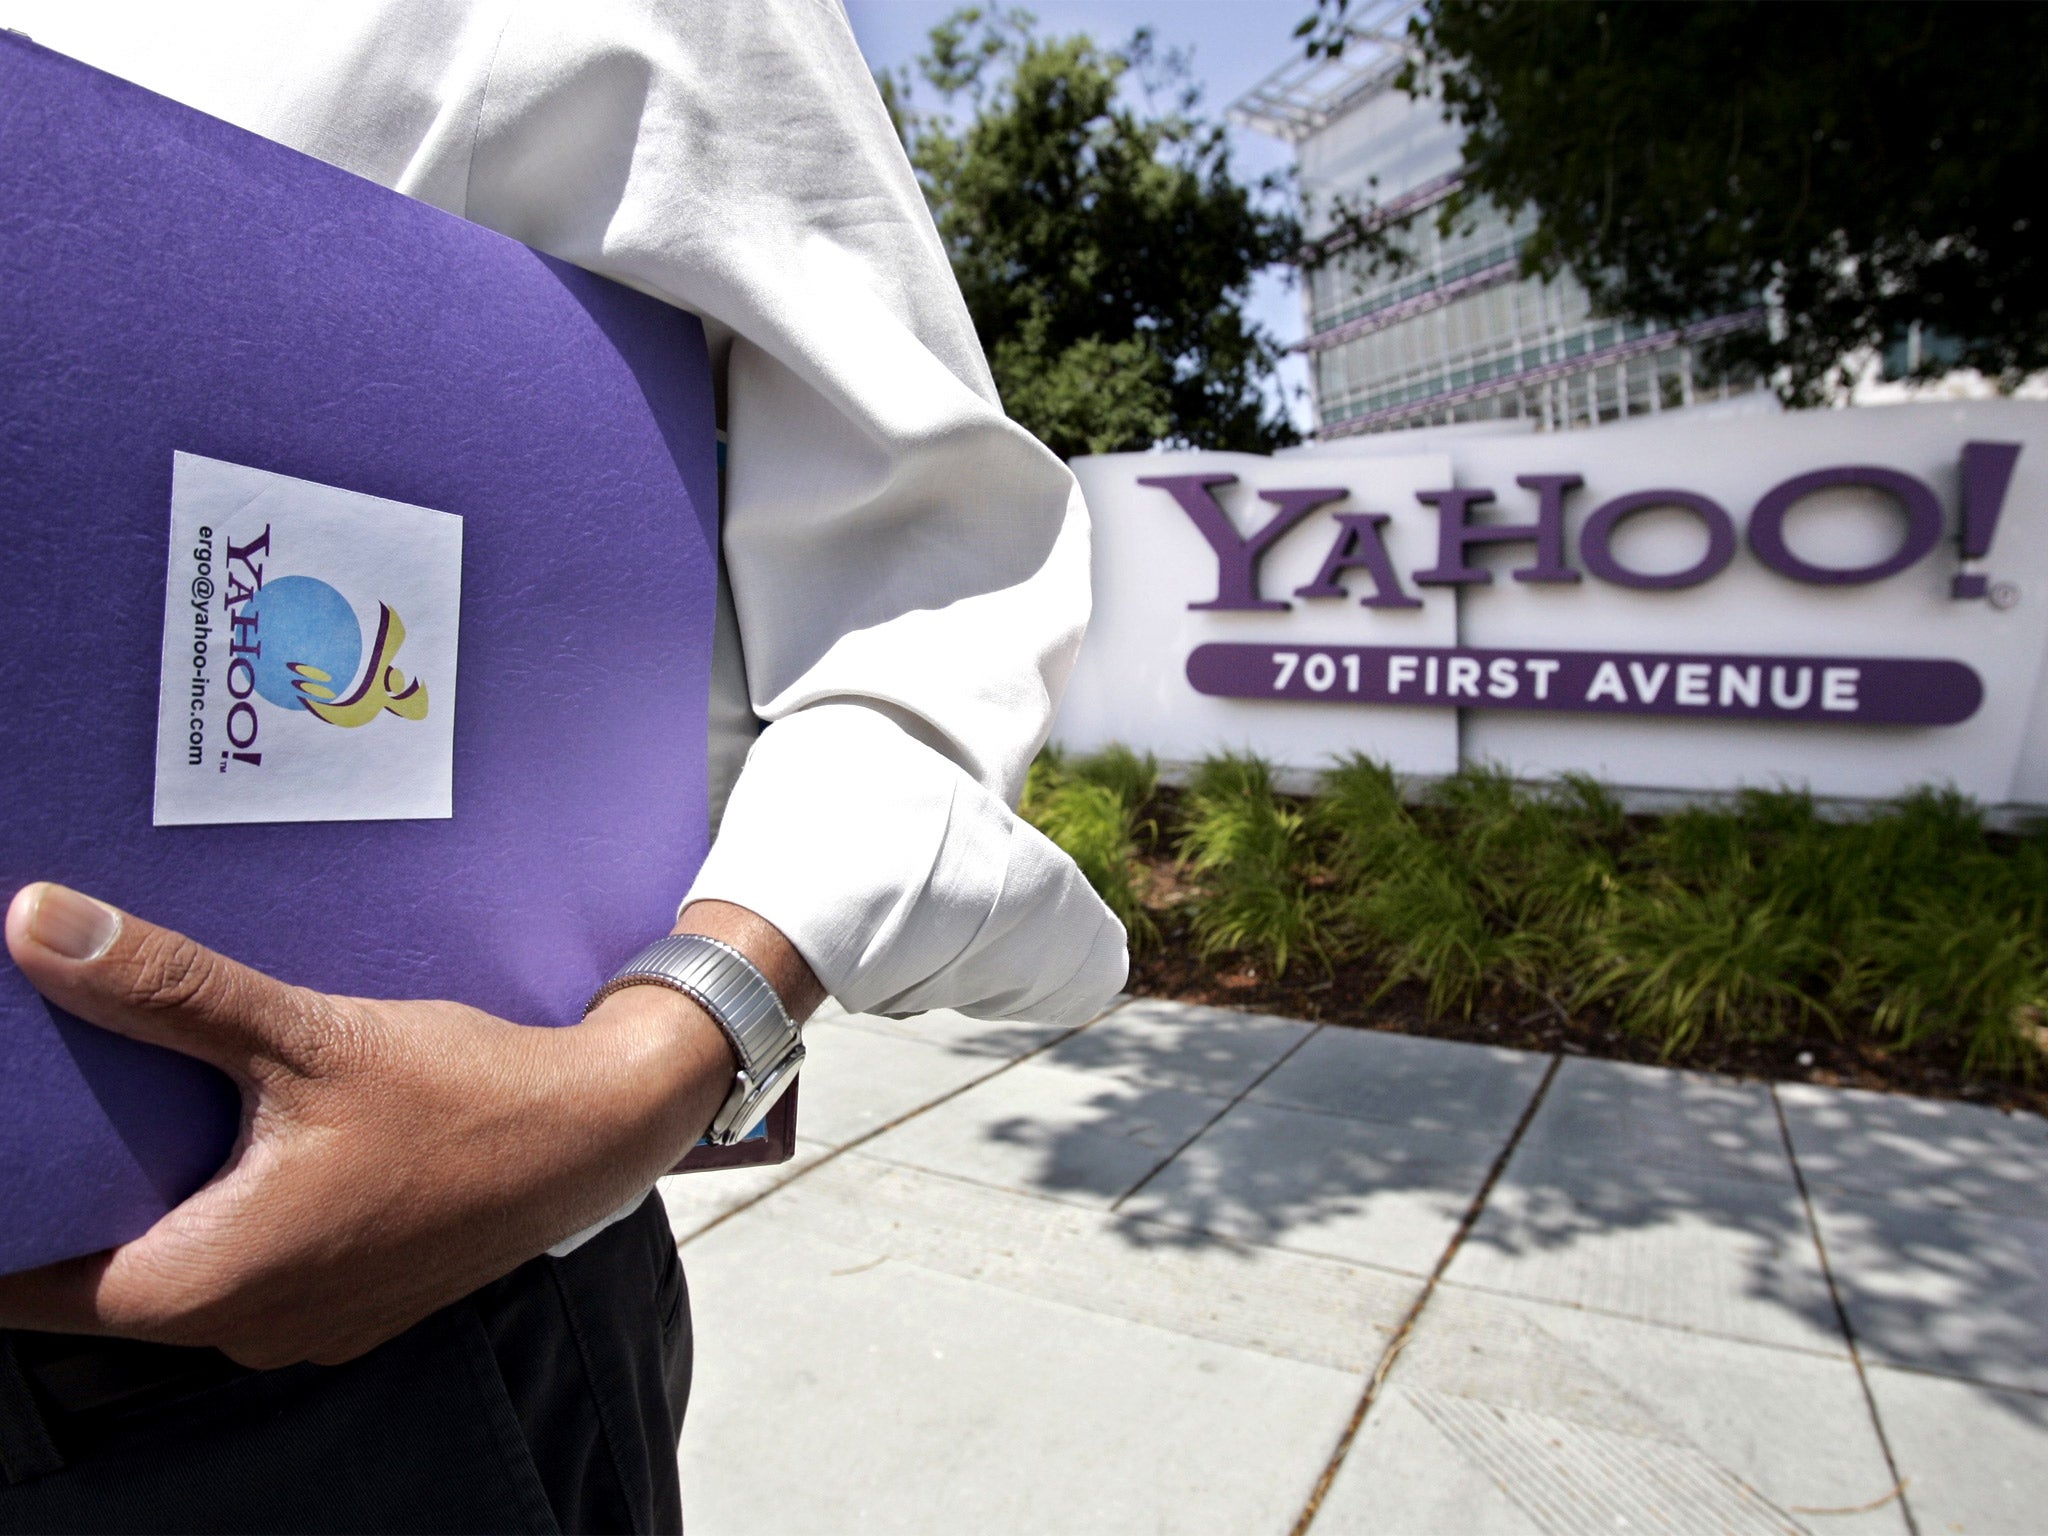 The Yahoo! offices in Sunnyvale, California